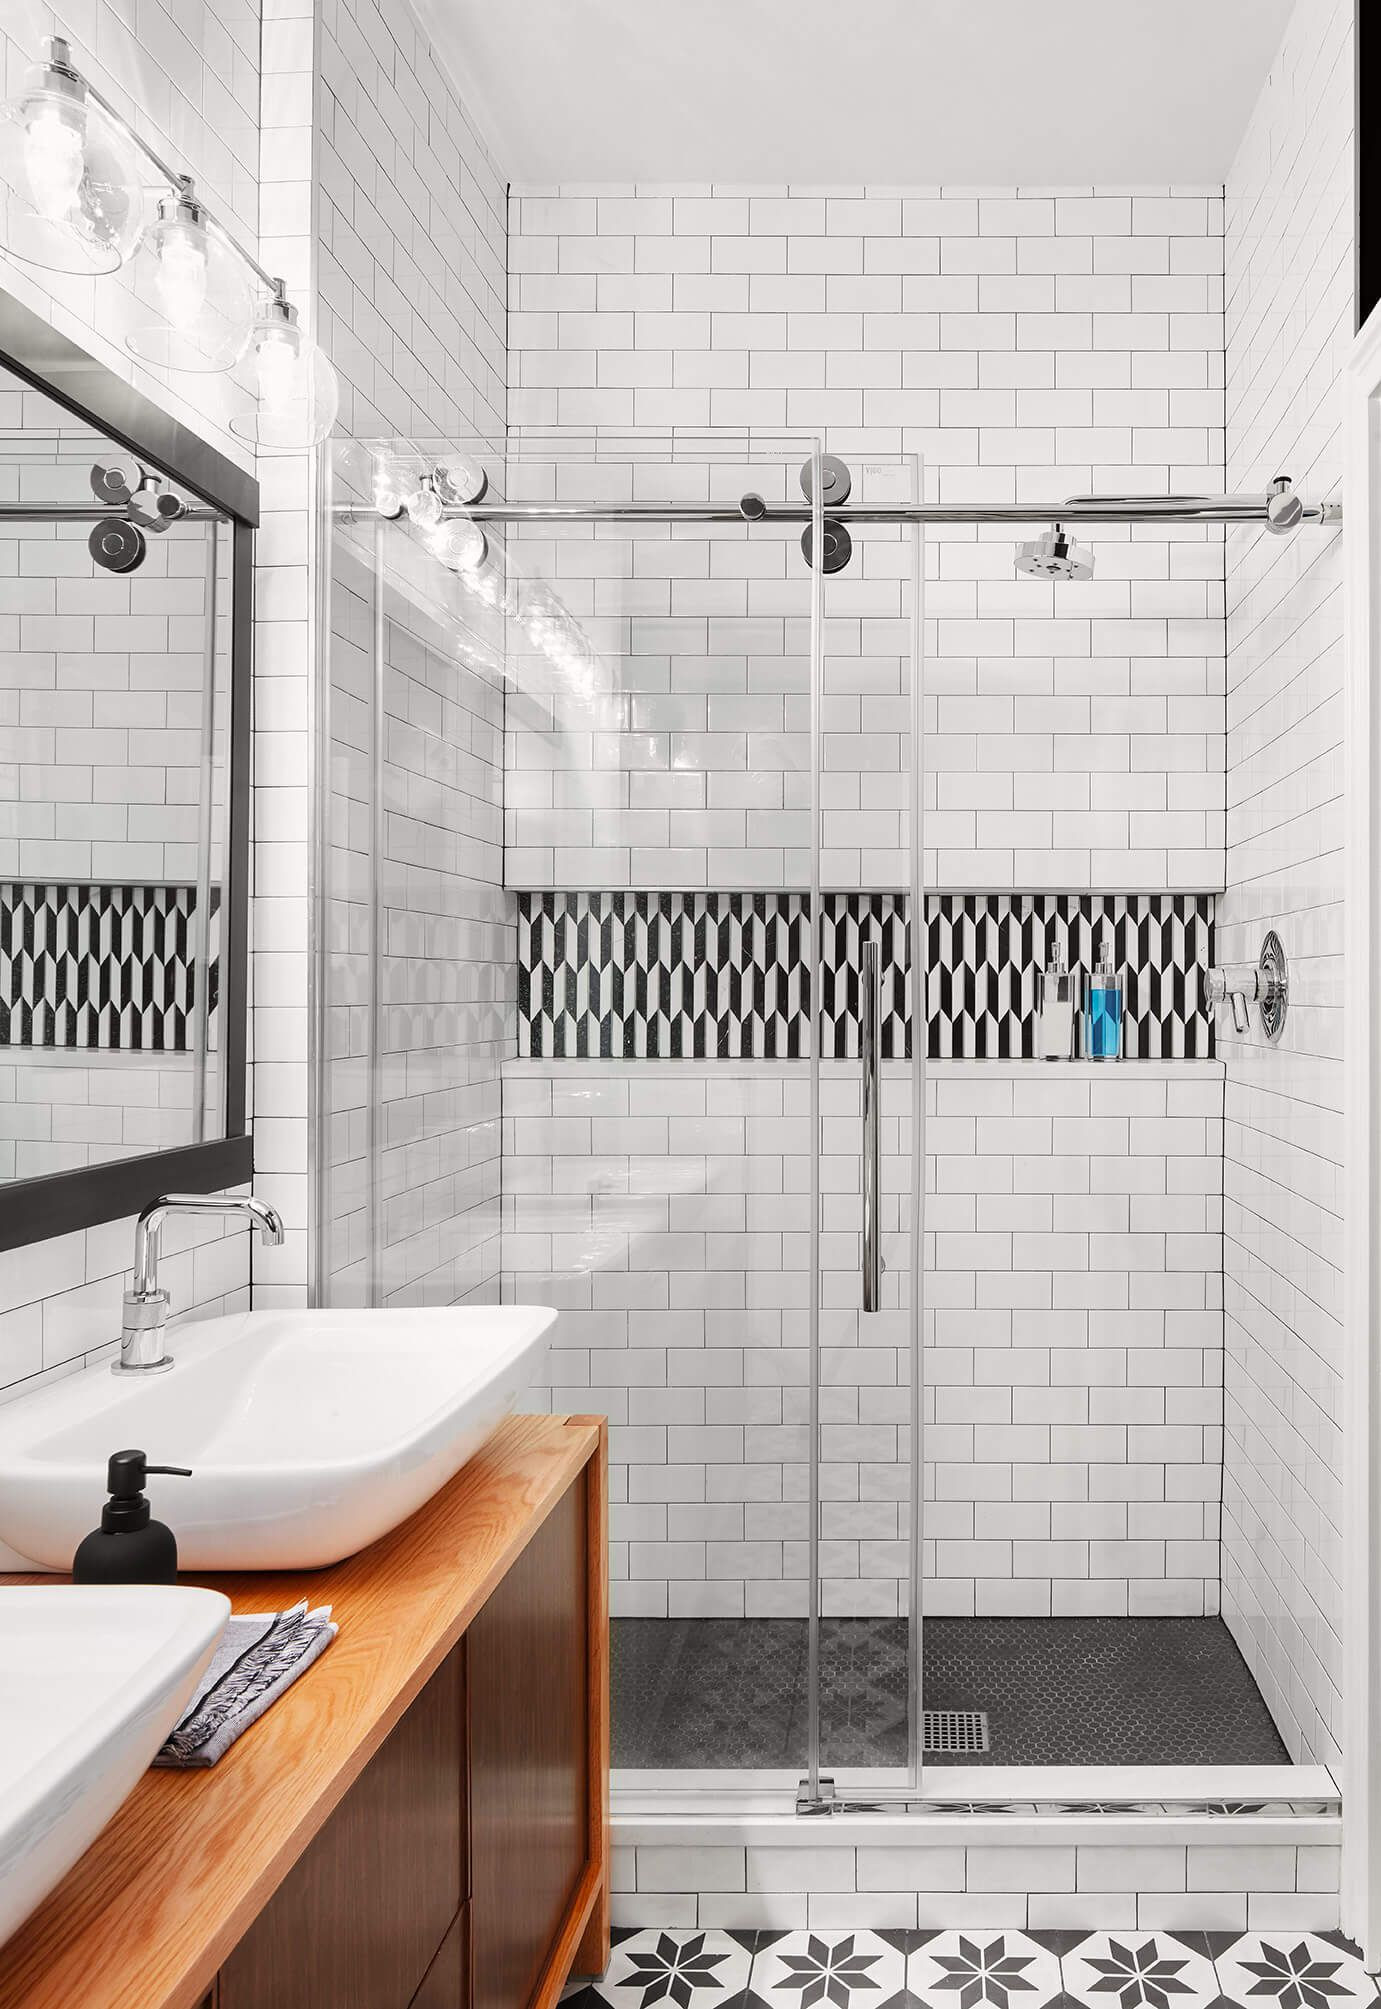 Subway Tile Bathroom Design
 16 Subway Tile Bathroom Ideas to Inspire Your Next Remodel